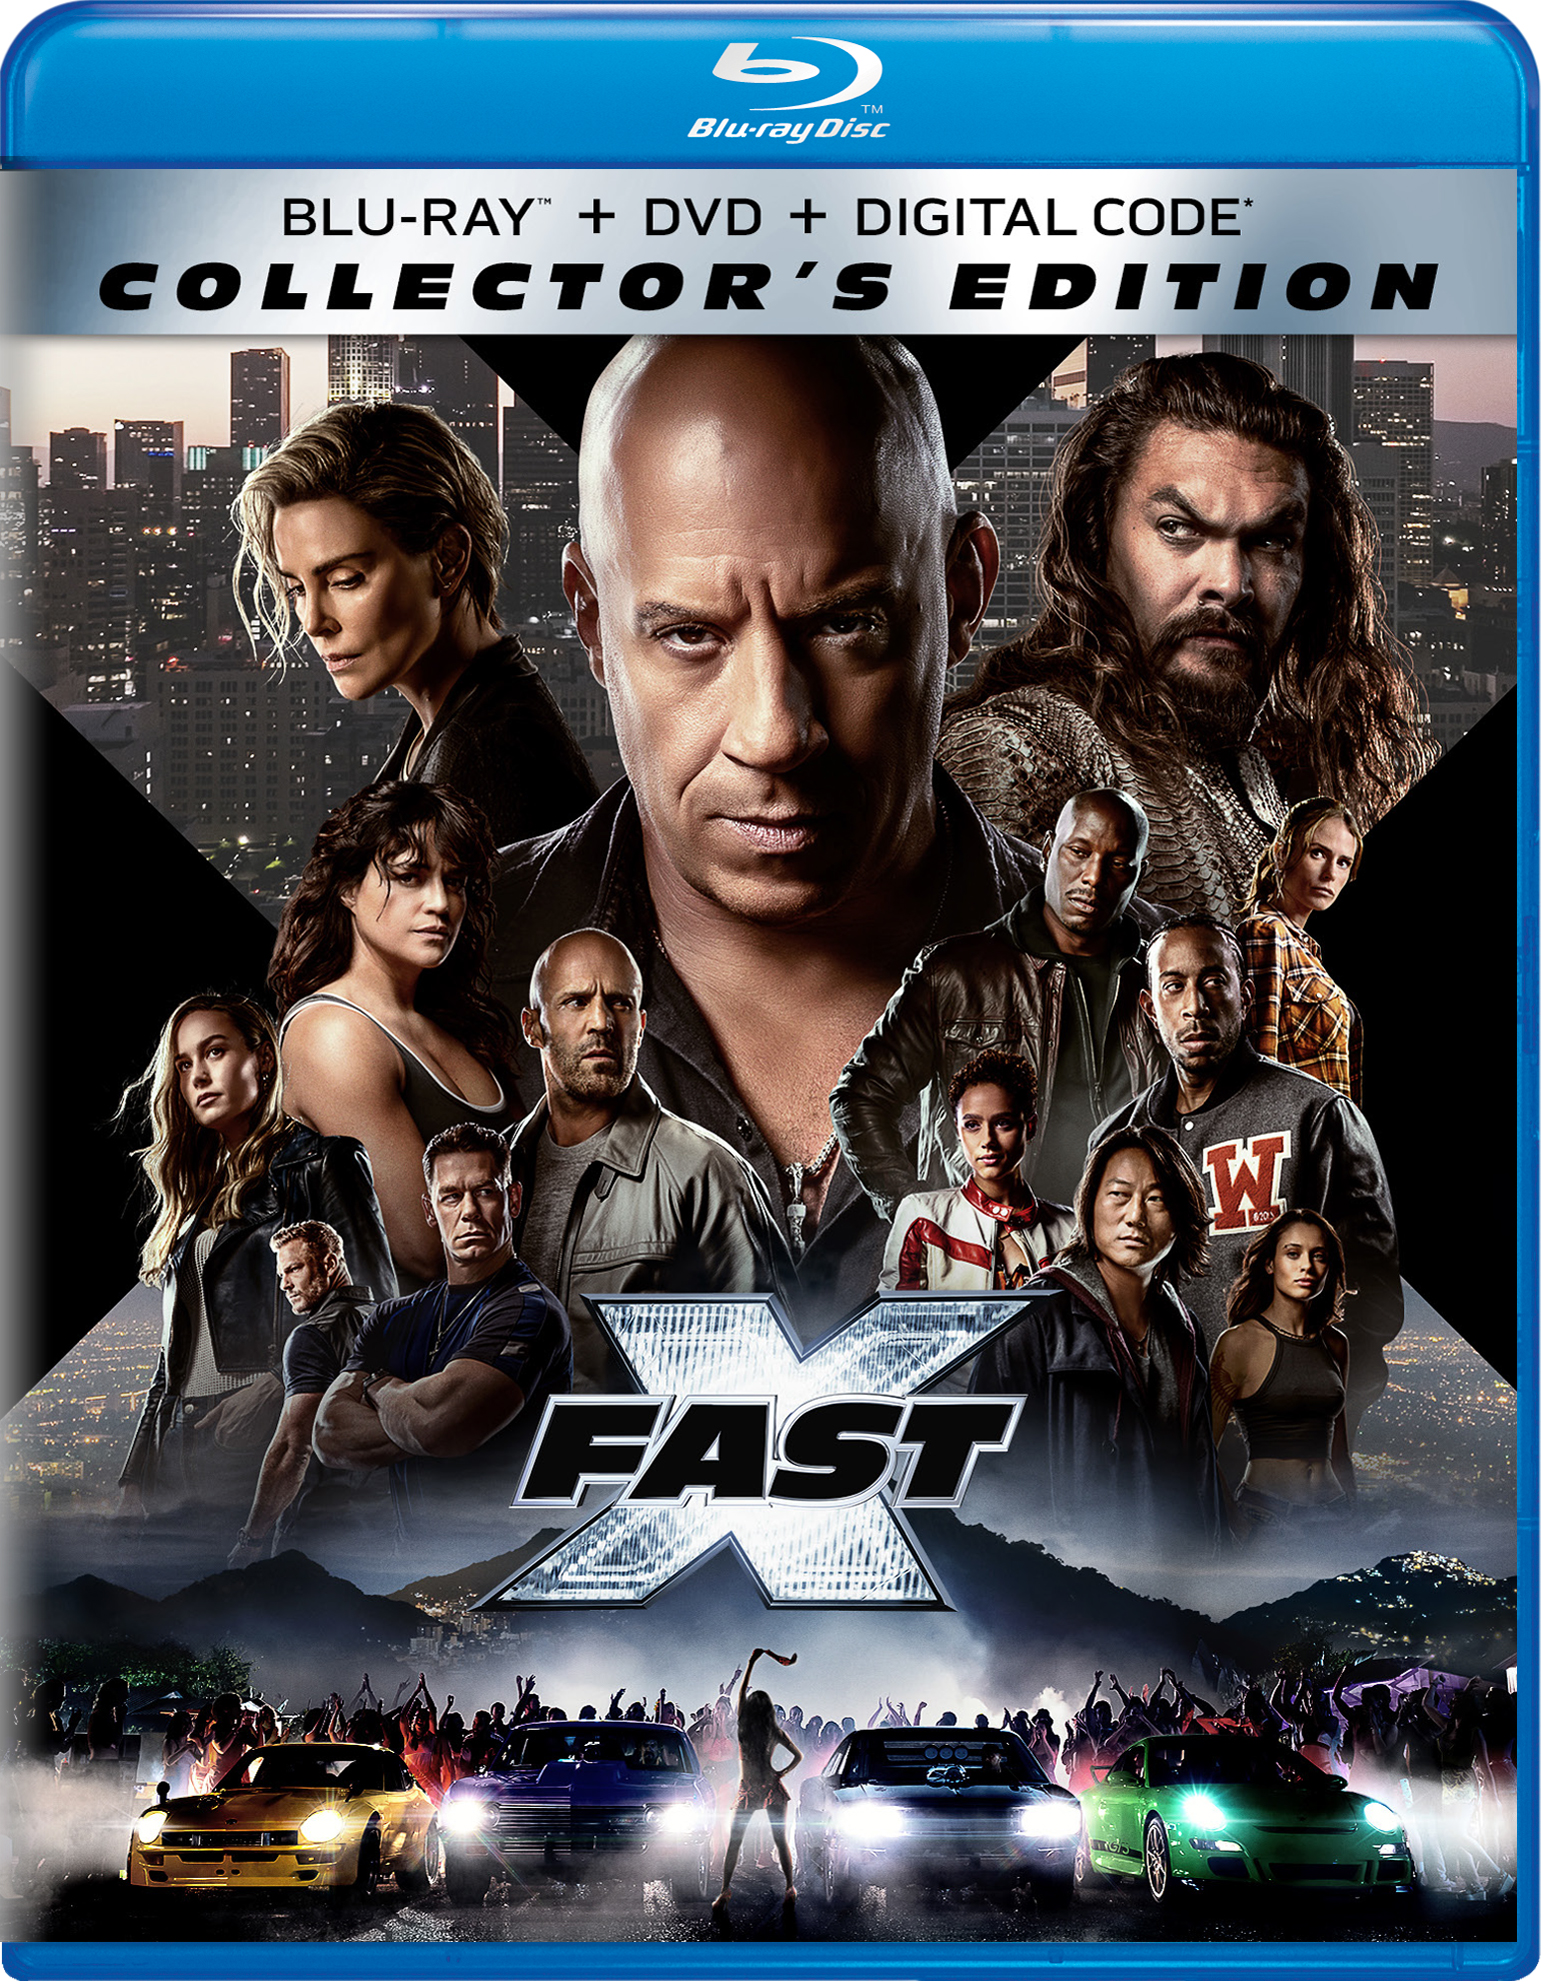 Coffret Fast & Furious 1 à 10 Blu-ray 4K Ultra HD